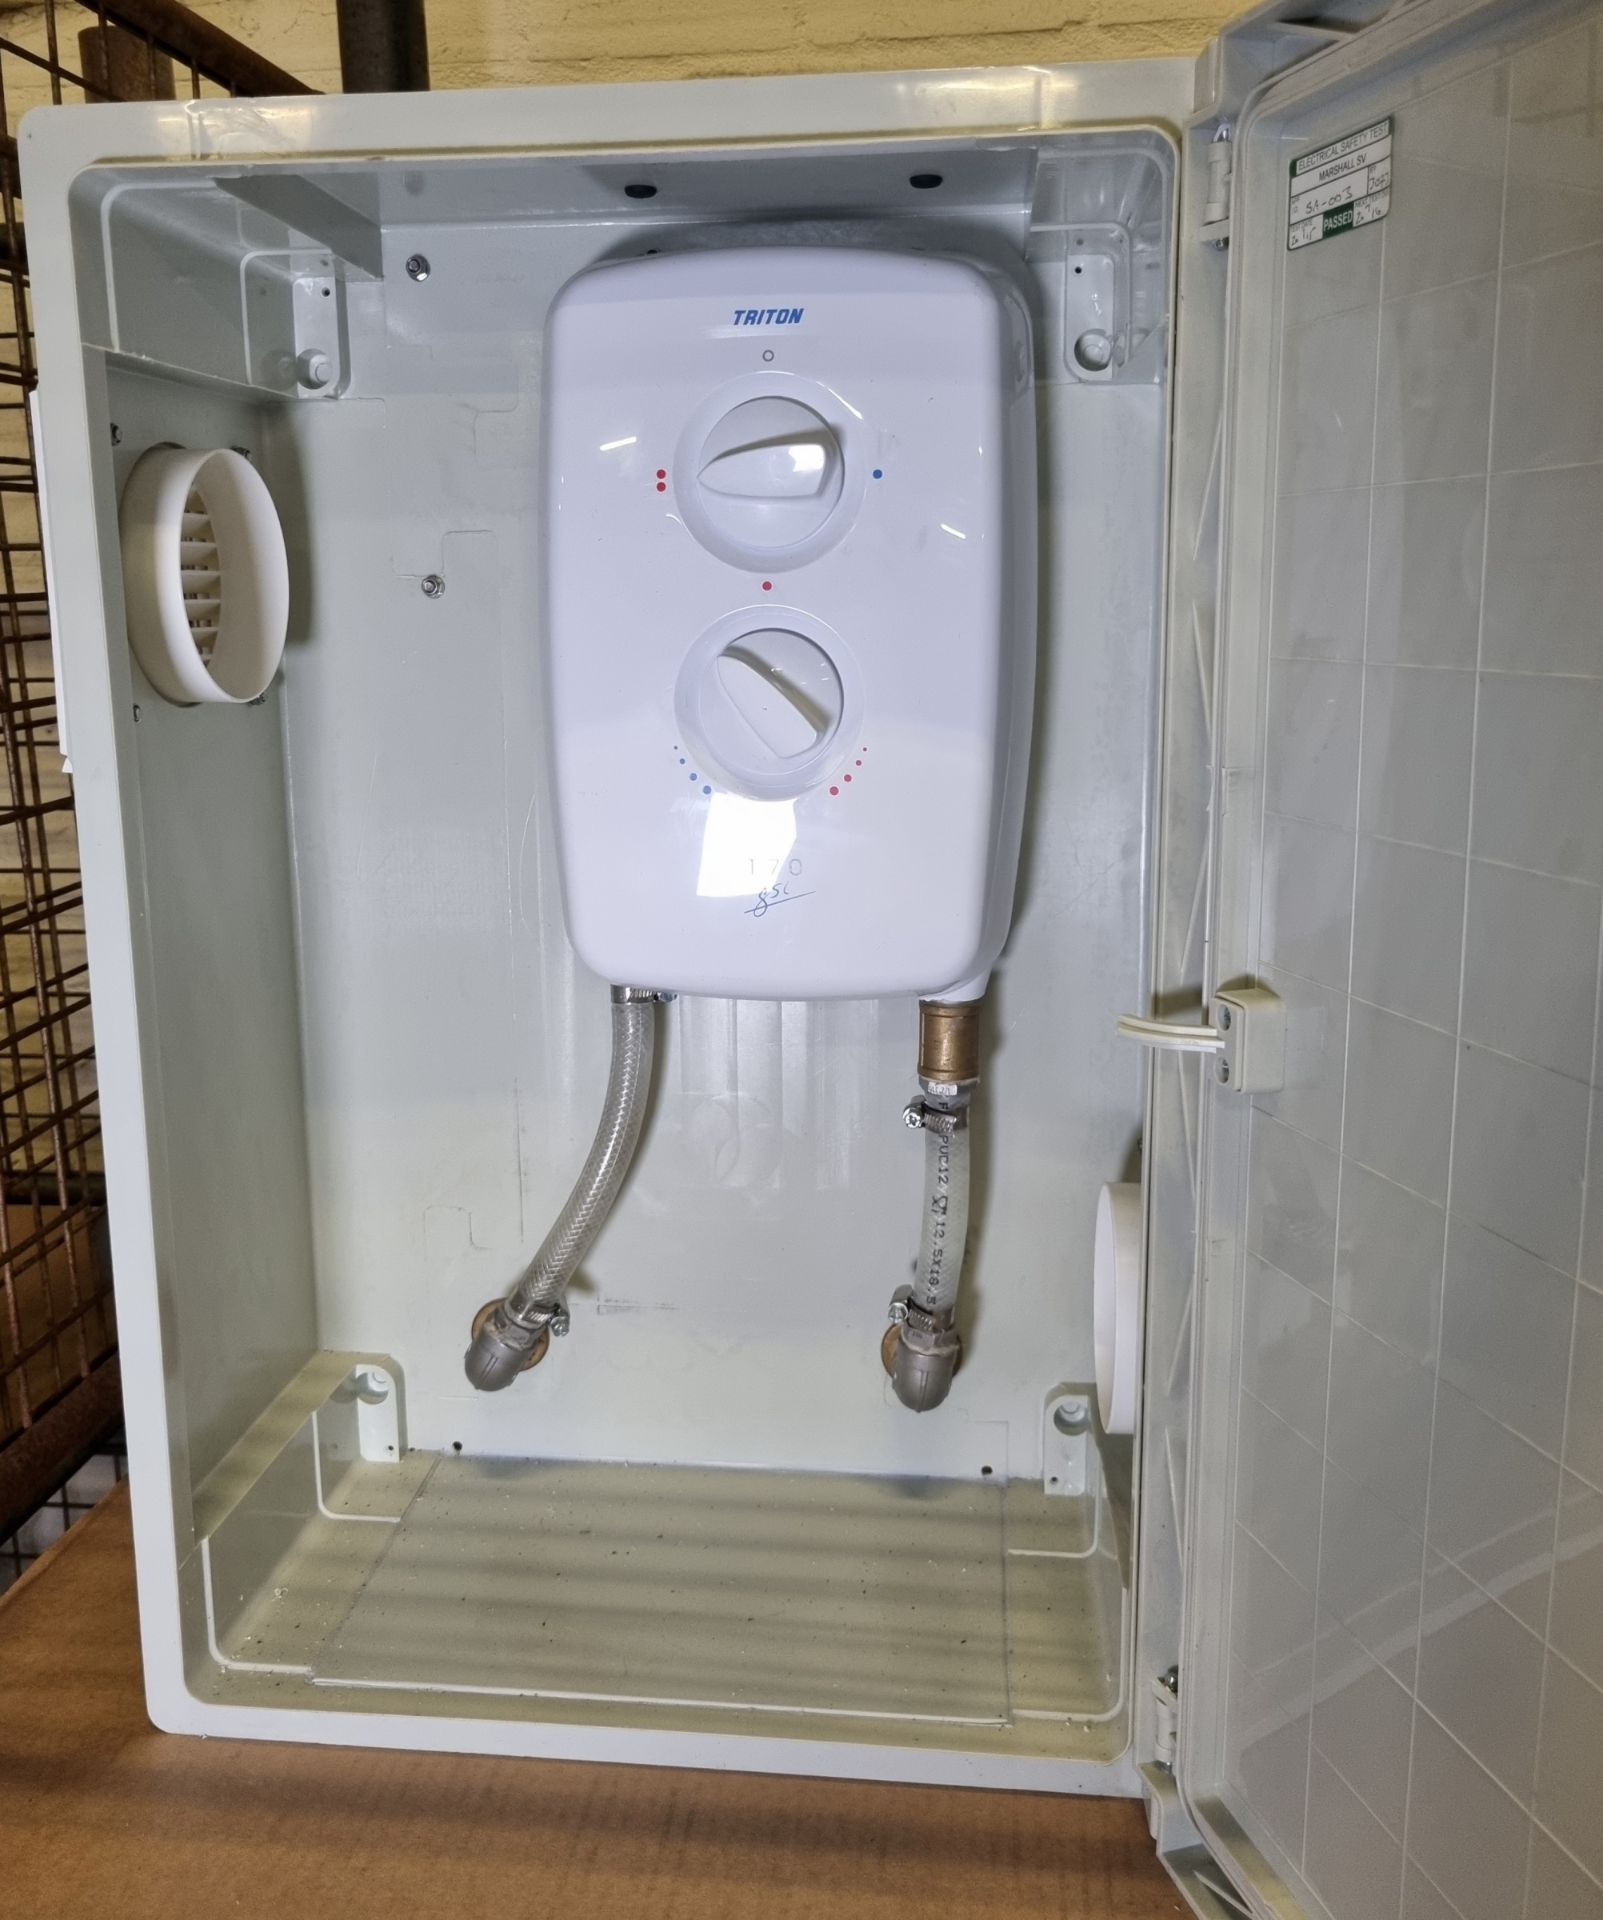 Triton T70 gsi shower unit in protective casing - 230V - 8.5Kw - L 43 x W 35 x H 60cm - Image 5 of 5